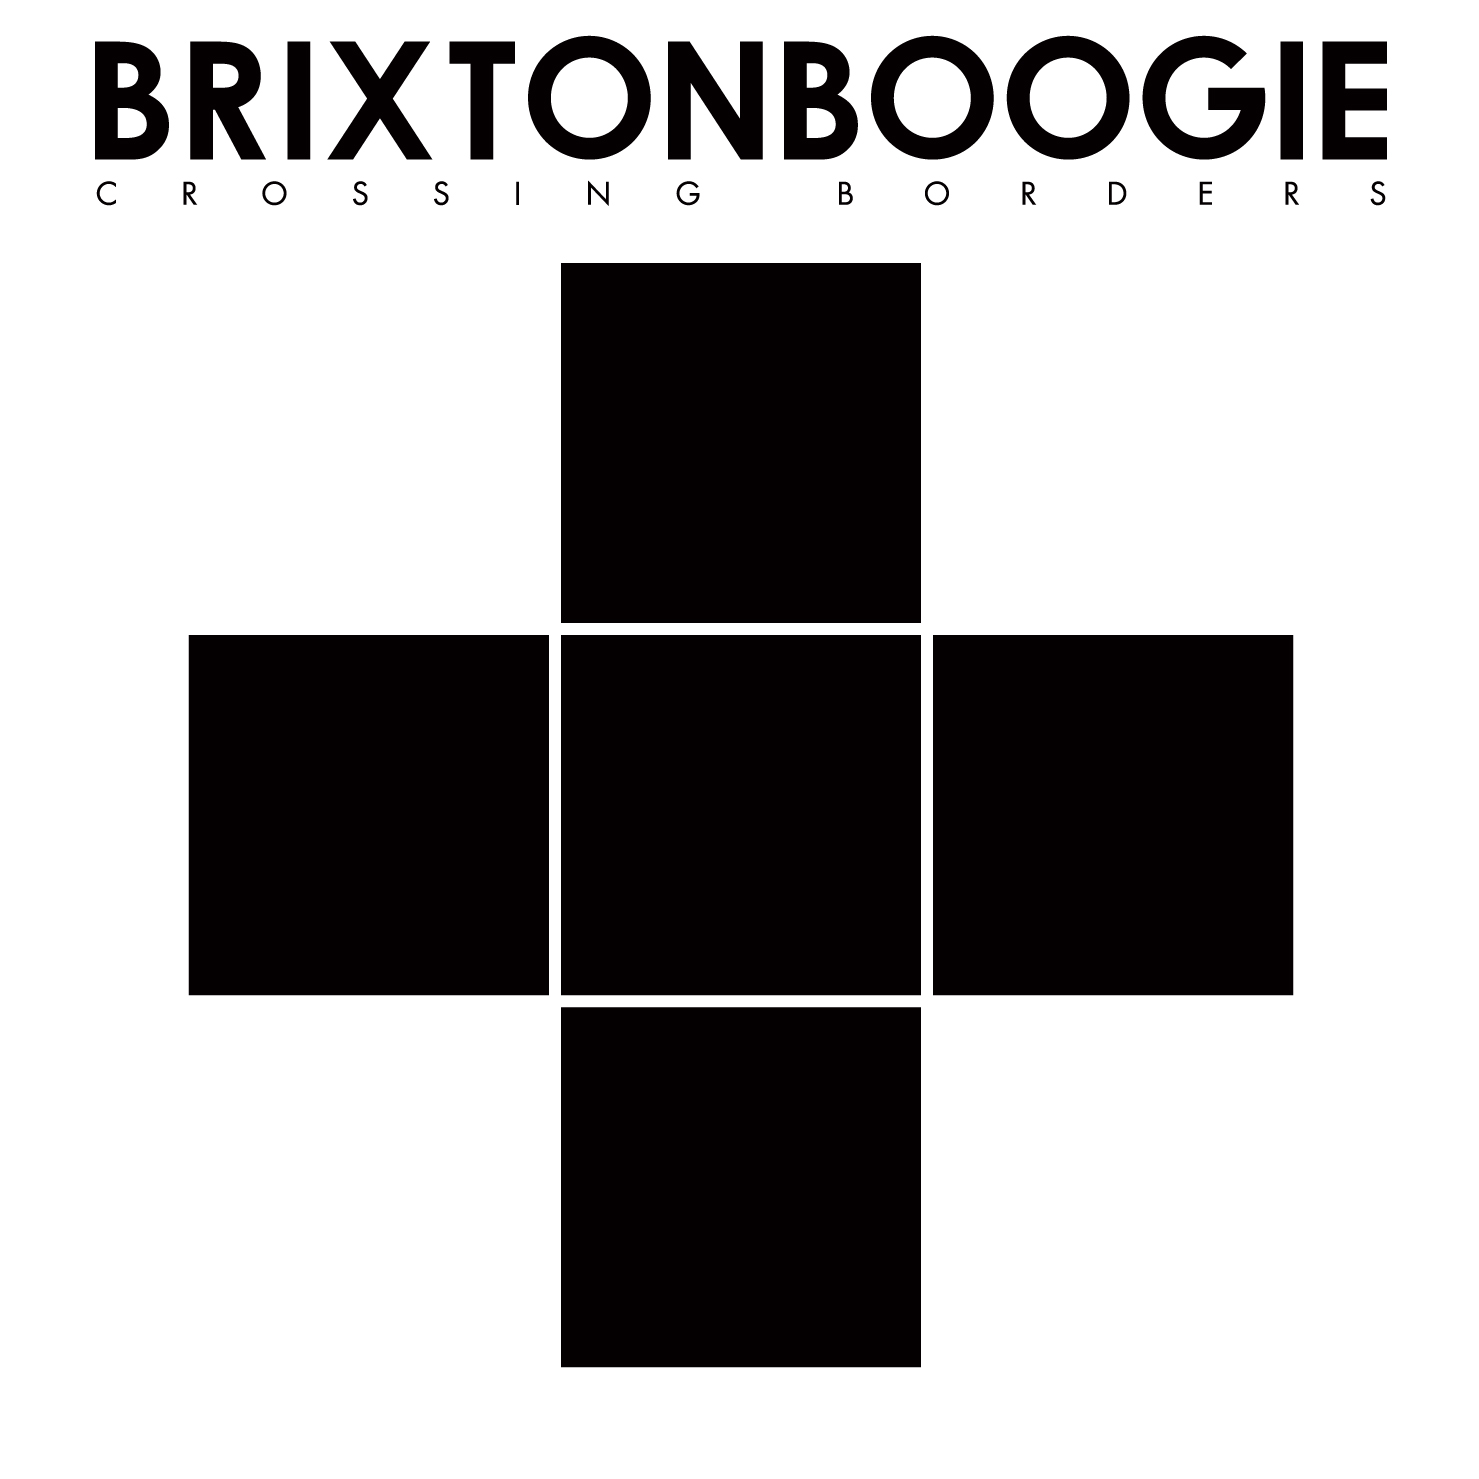 Brixtonboogie - "Crossing Borders"